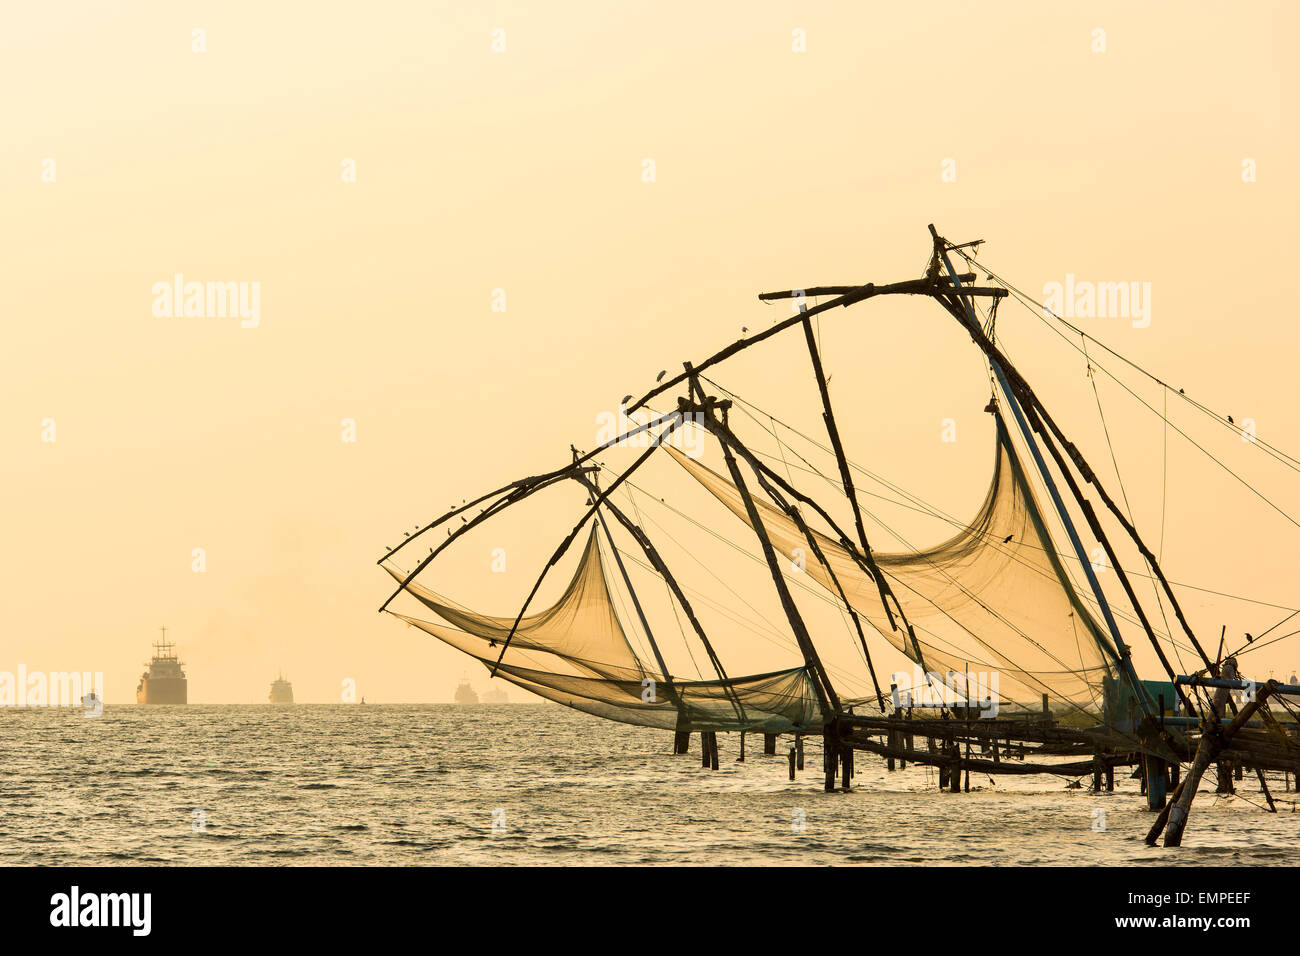 Chinese fishing nets, sunset, Arabian Sea coast, Kochi, Kerala, South India, India Stock Photo